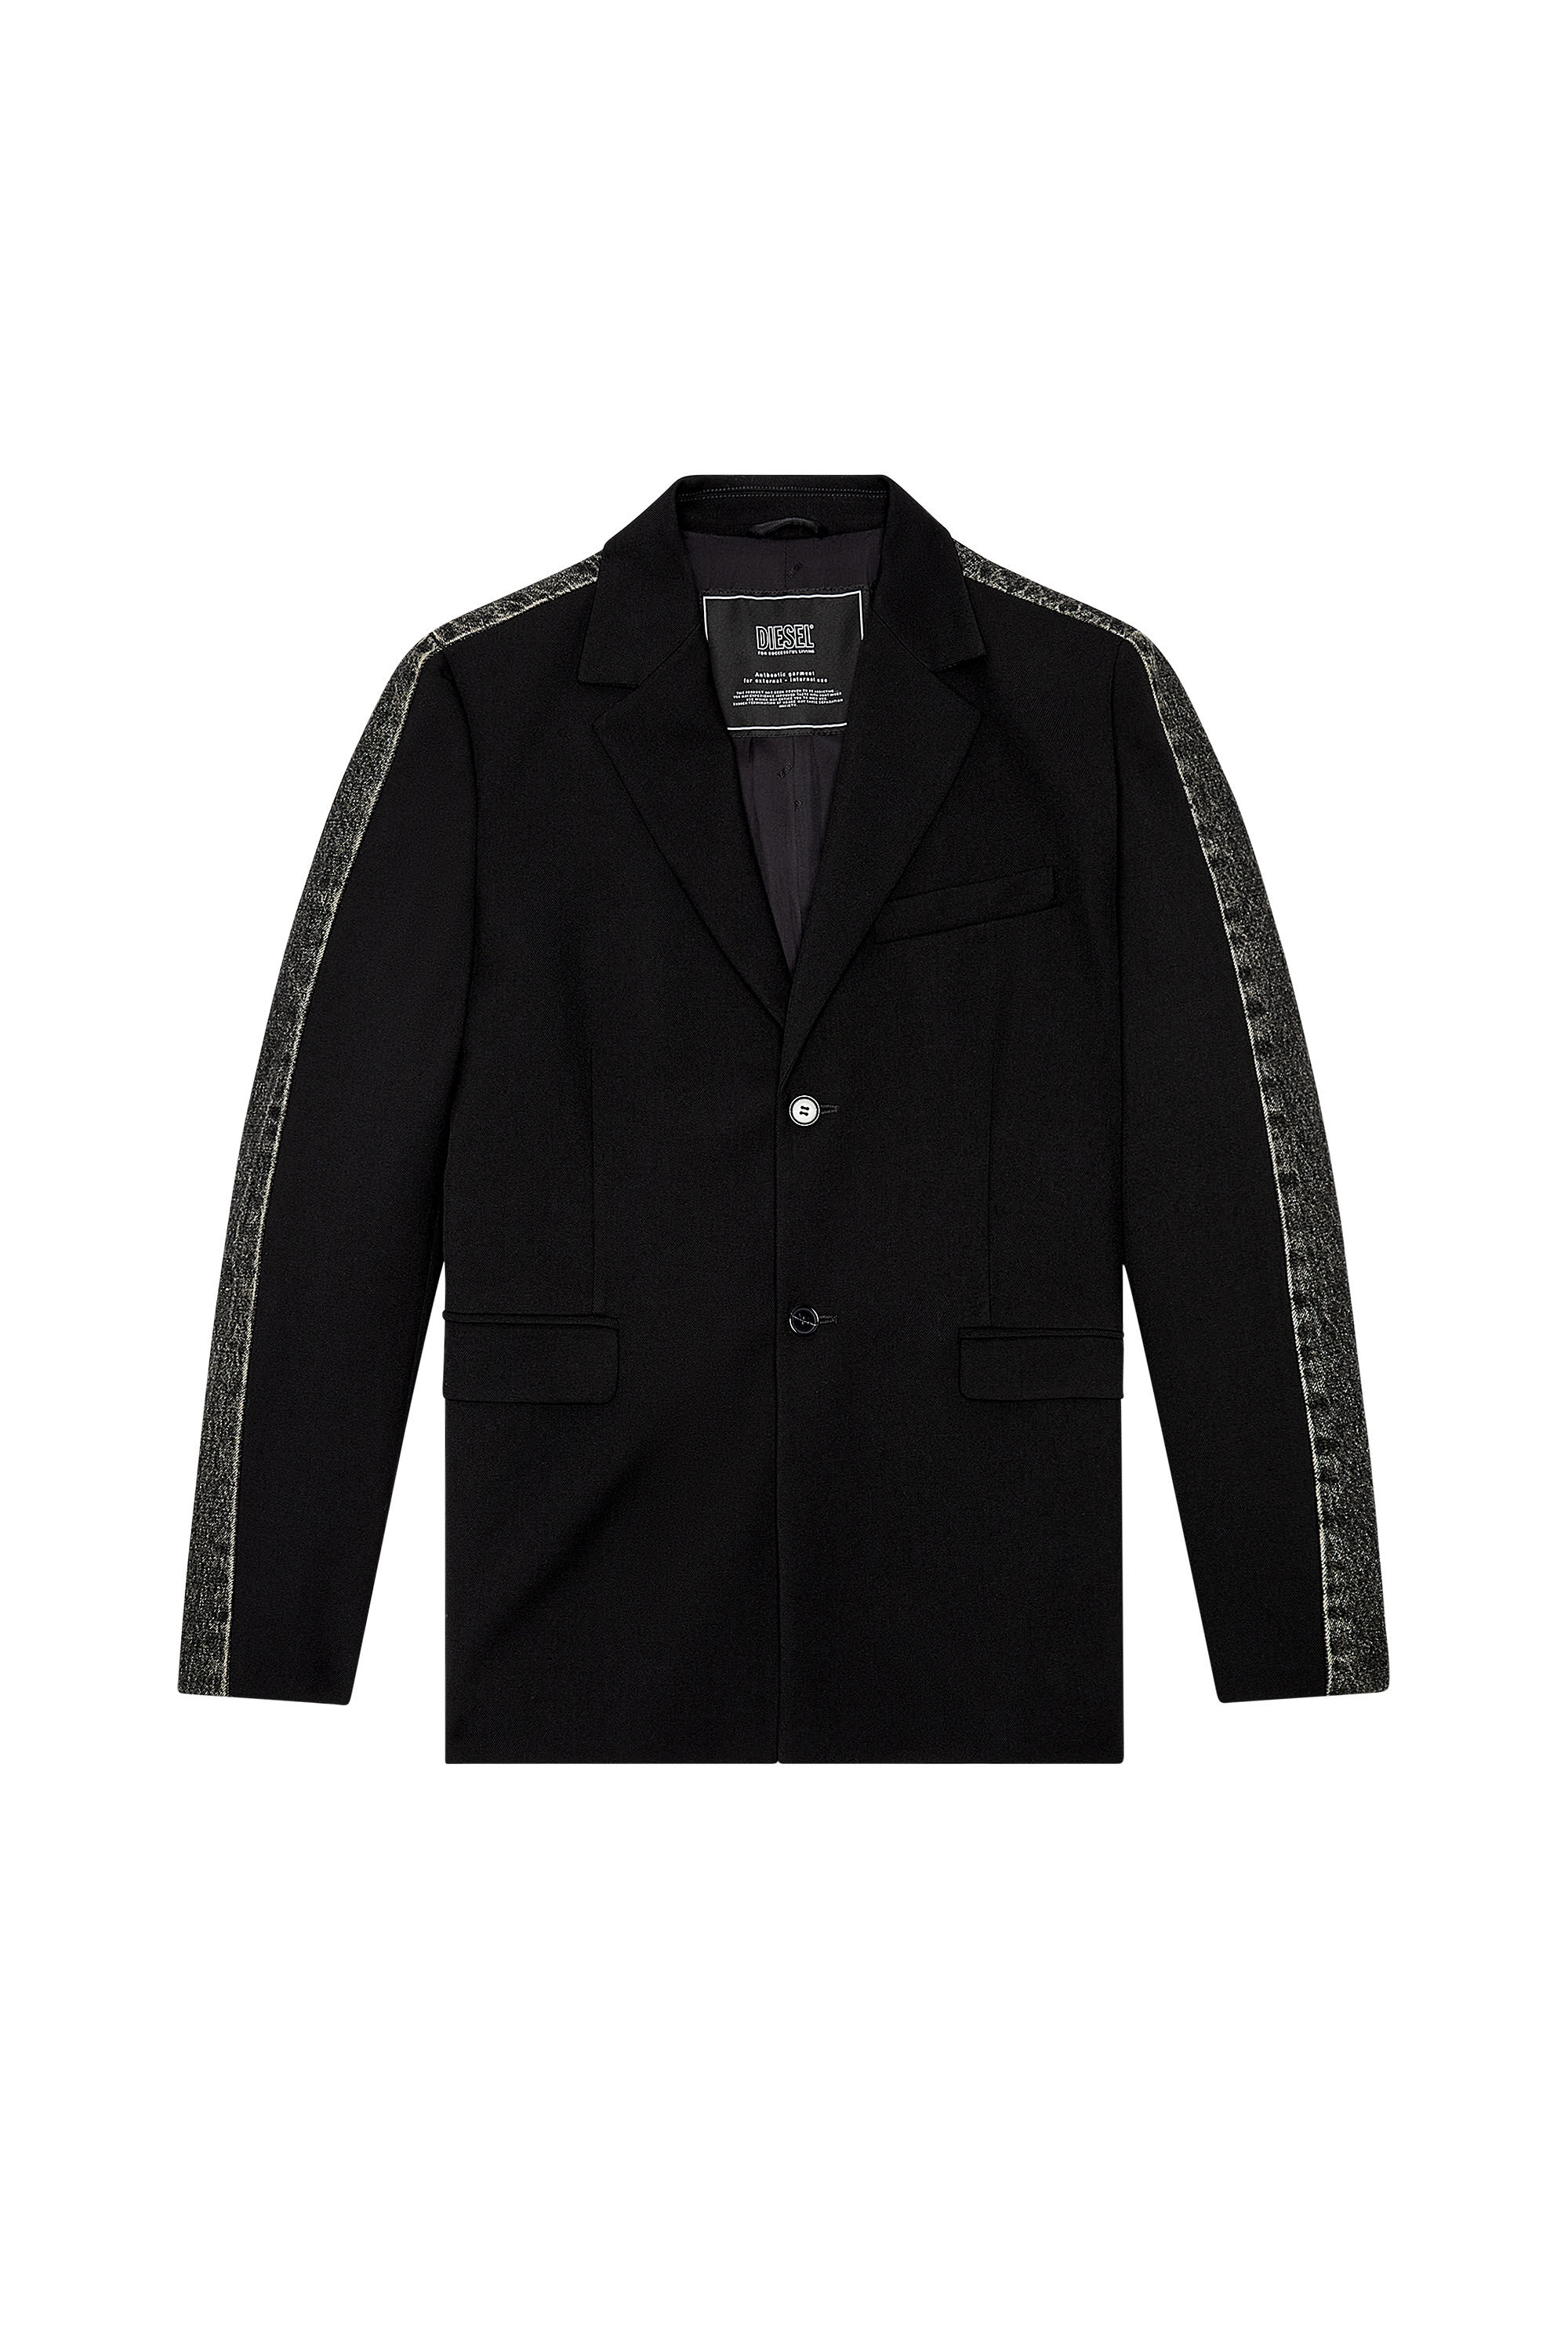 Diesel - J-WIRE-A, Man Hybrid blazer in cool wool and denim in Black - Image 2